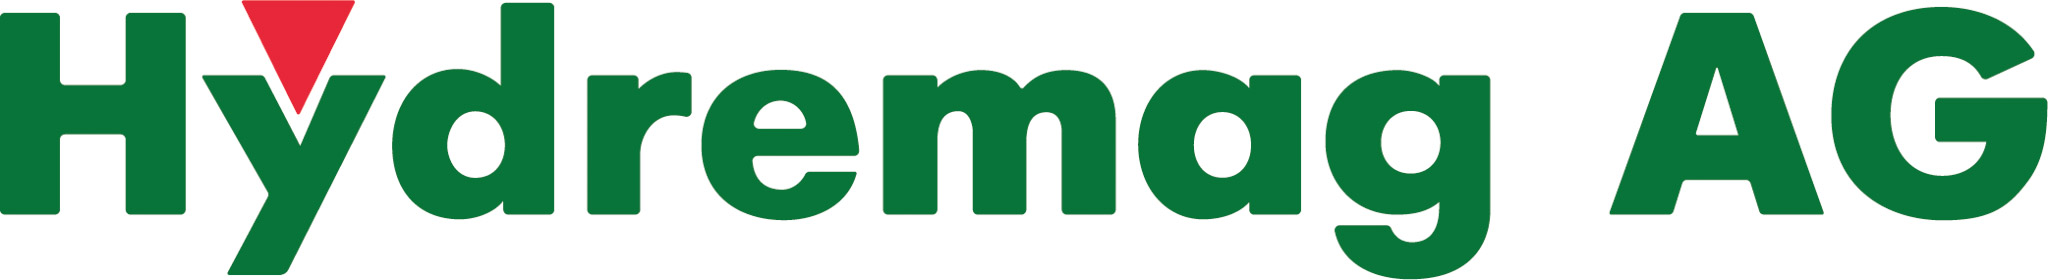 logo du sponsor Hydremog